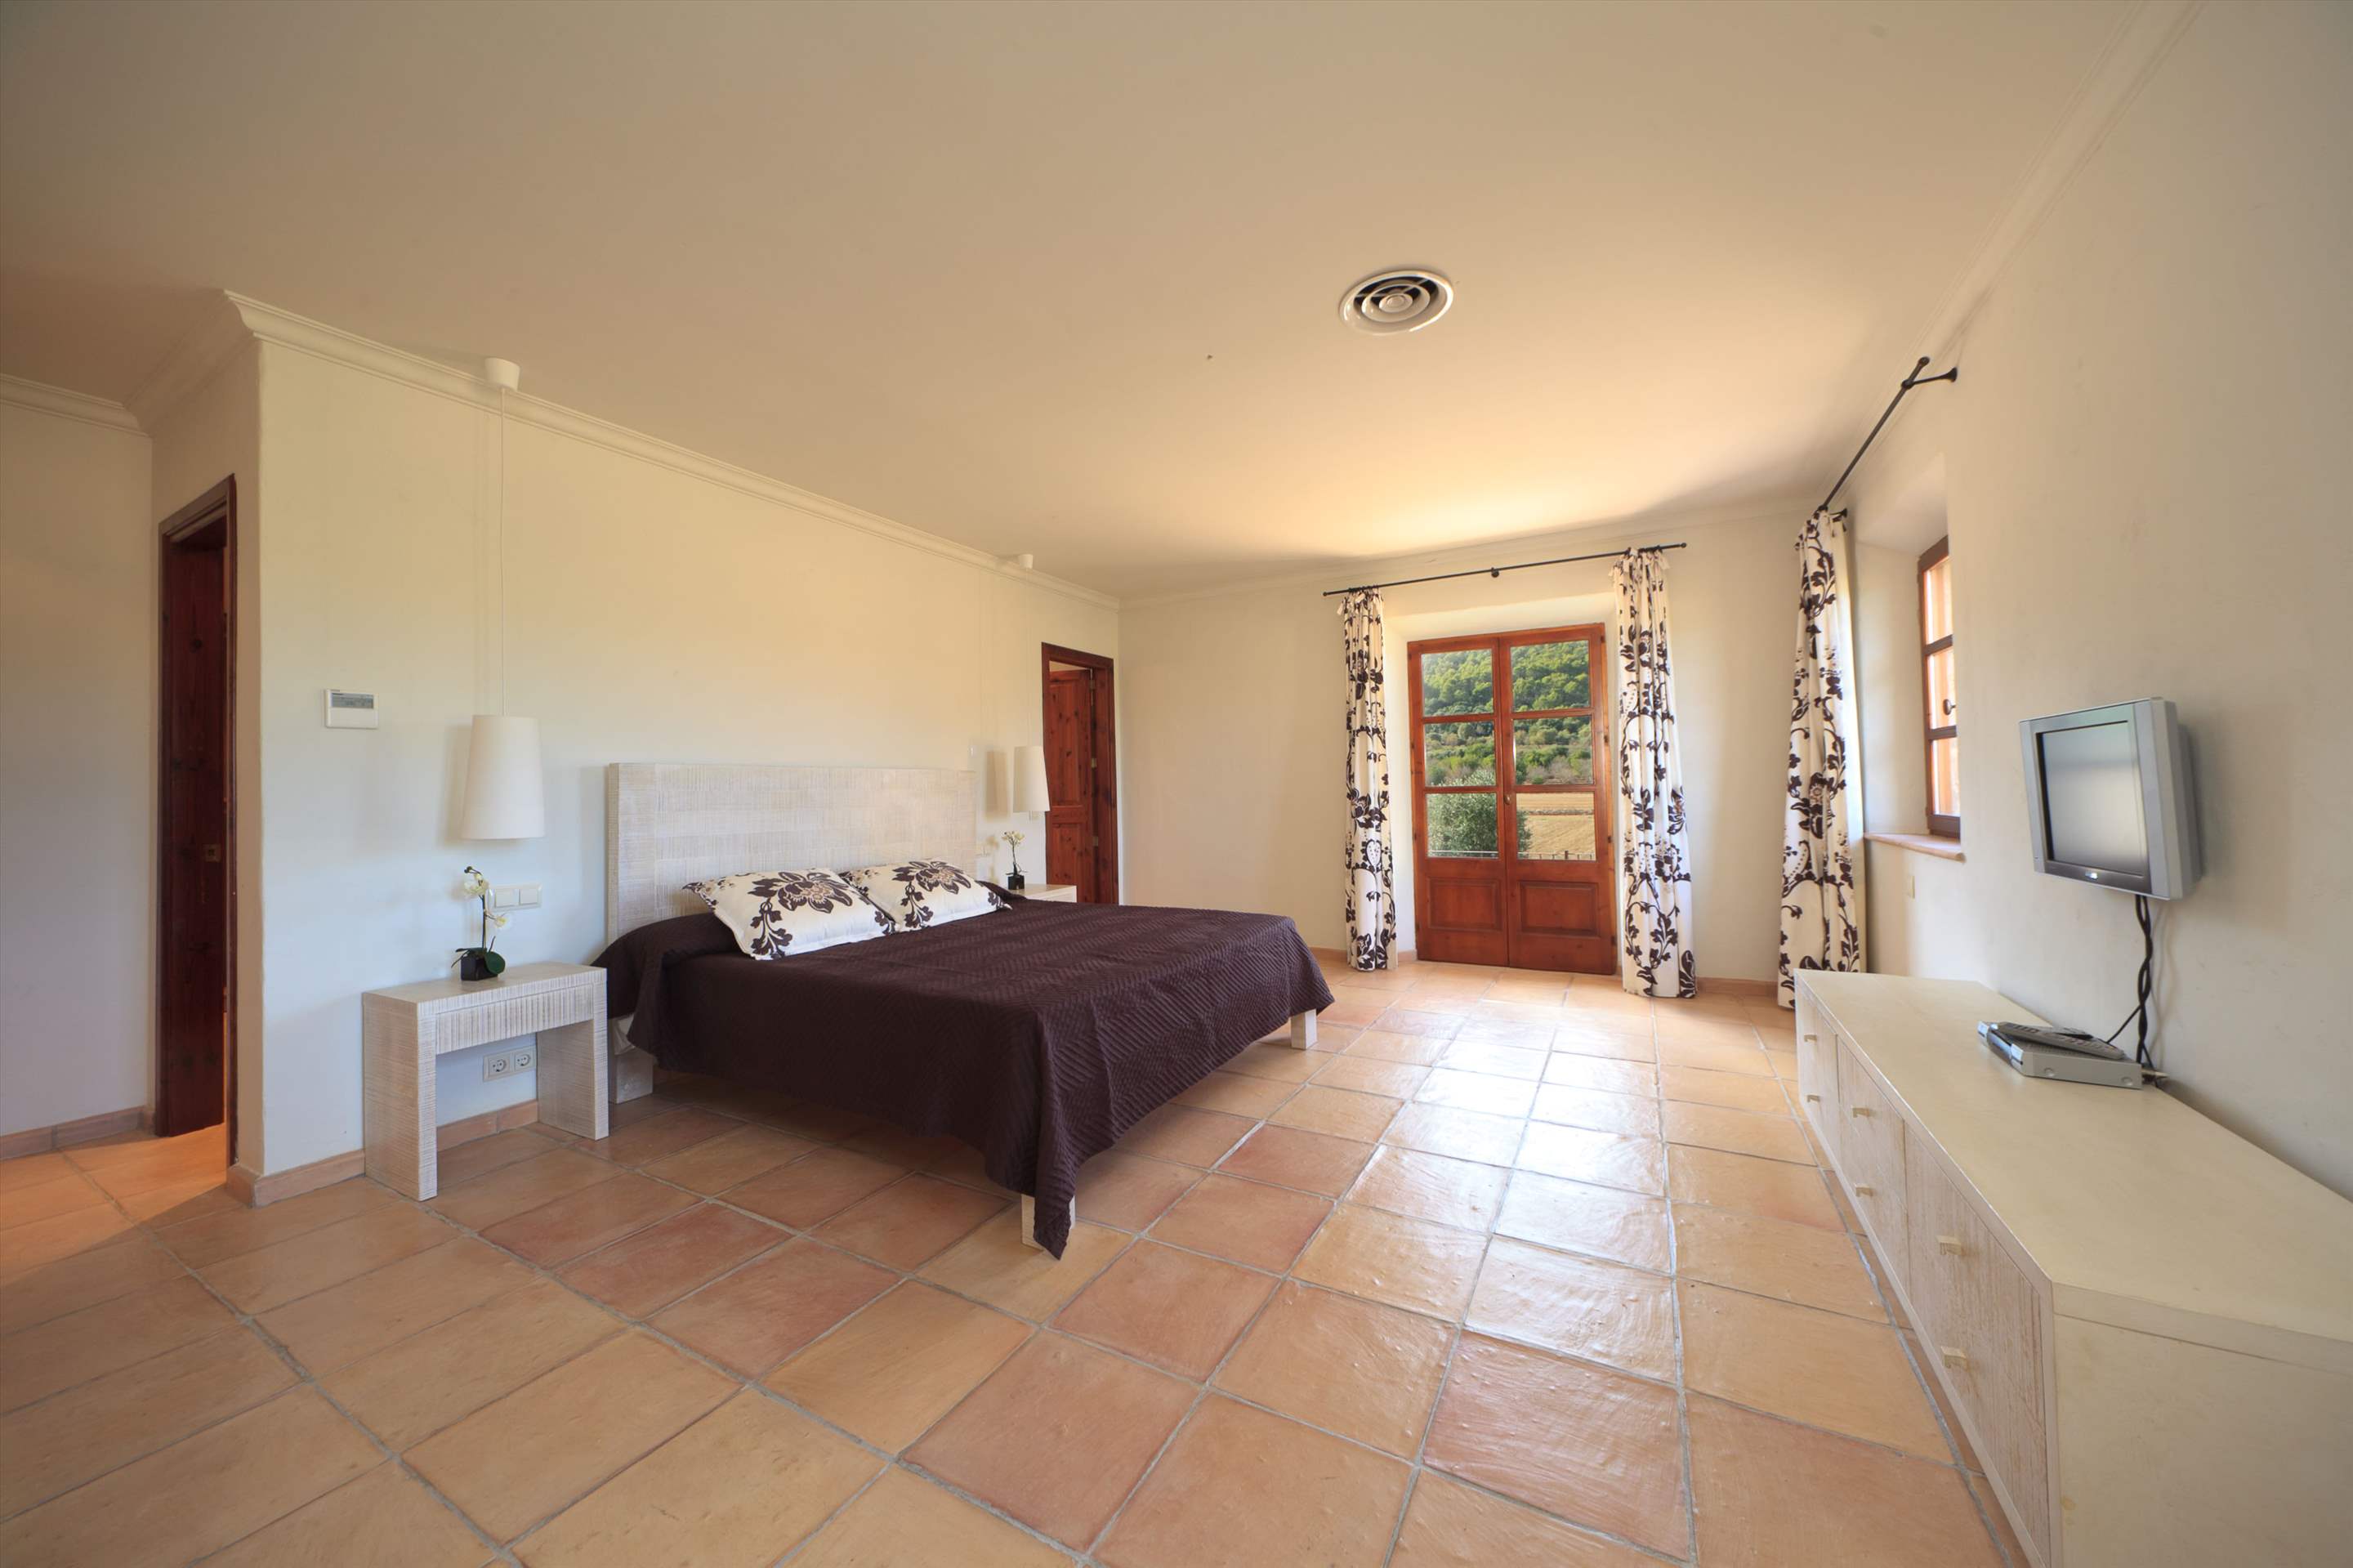 Son Ferragut de Baix , 4 bedroom villa in Sa Pobla, Buger, Inca , Majorca Photo #9